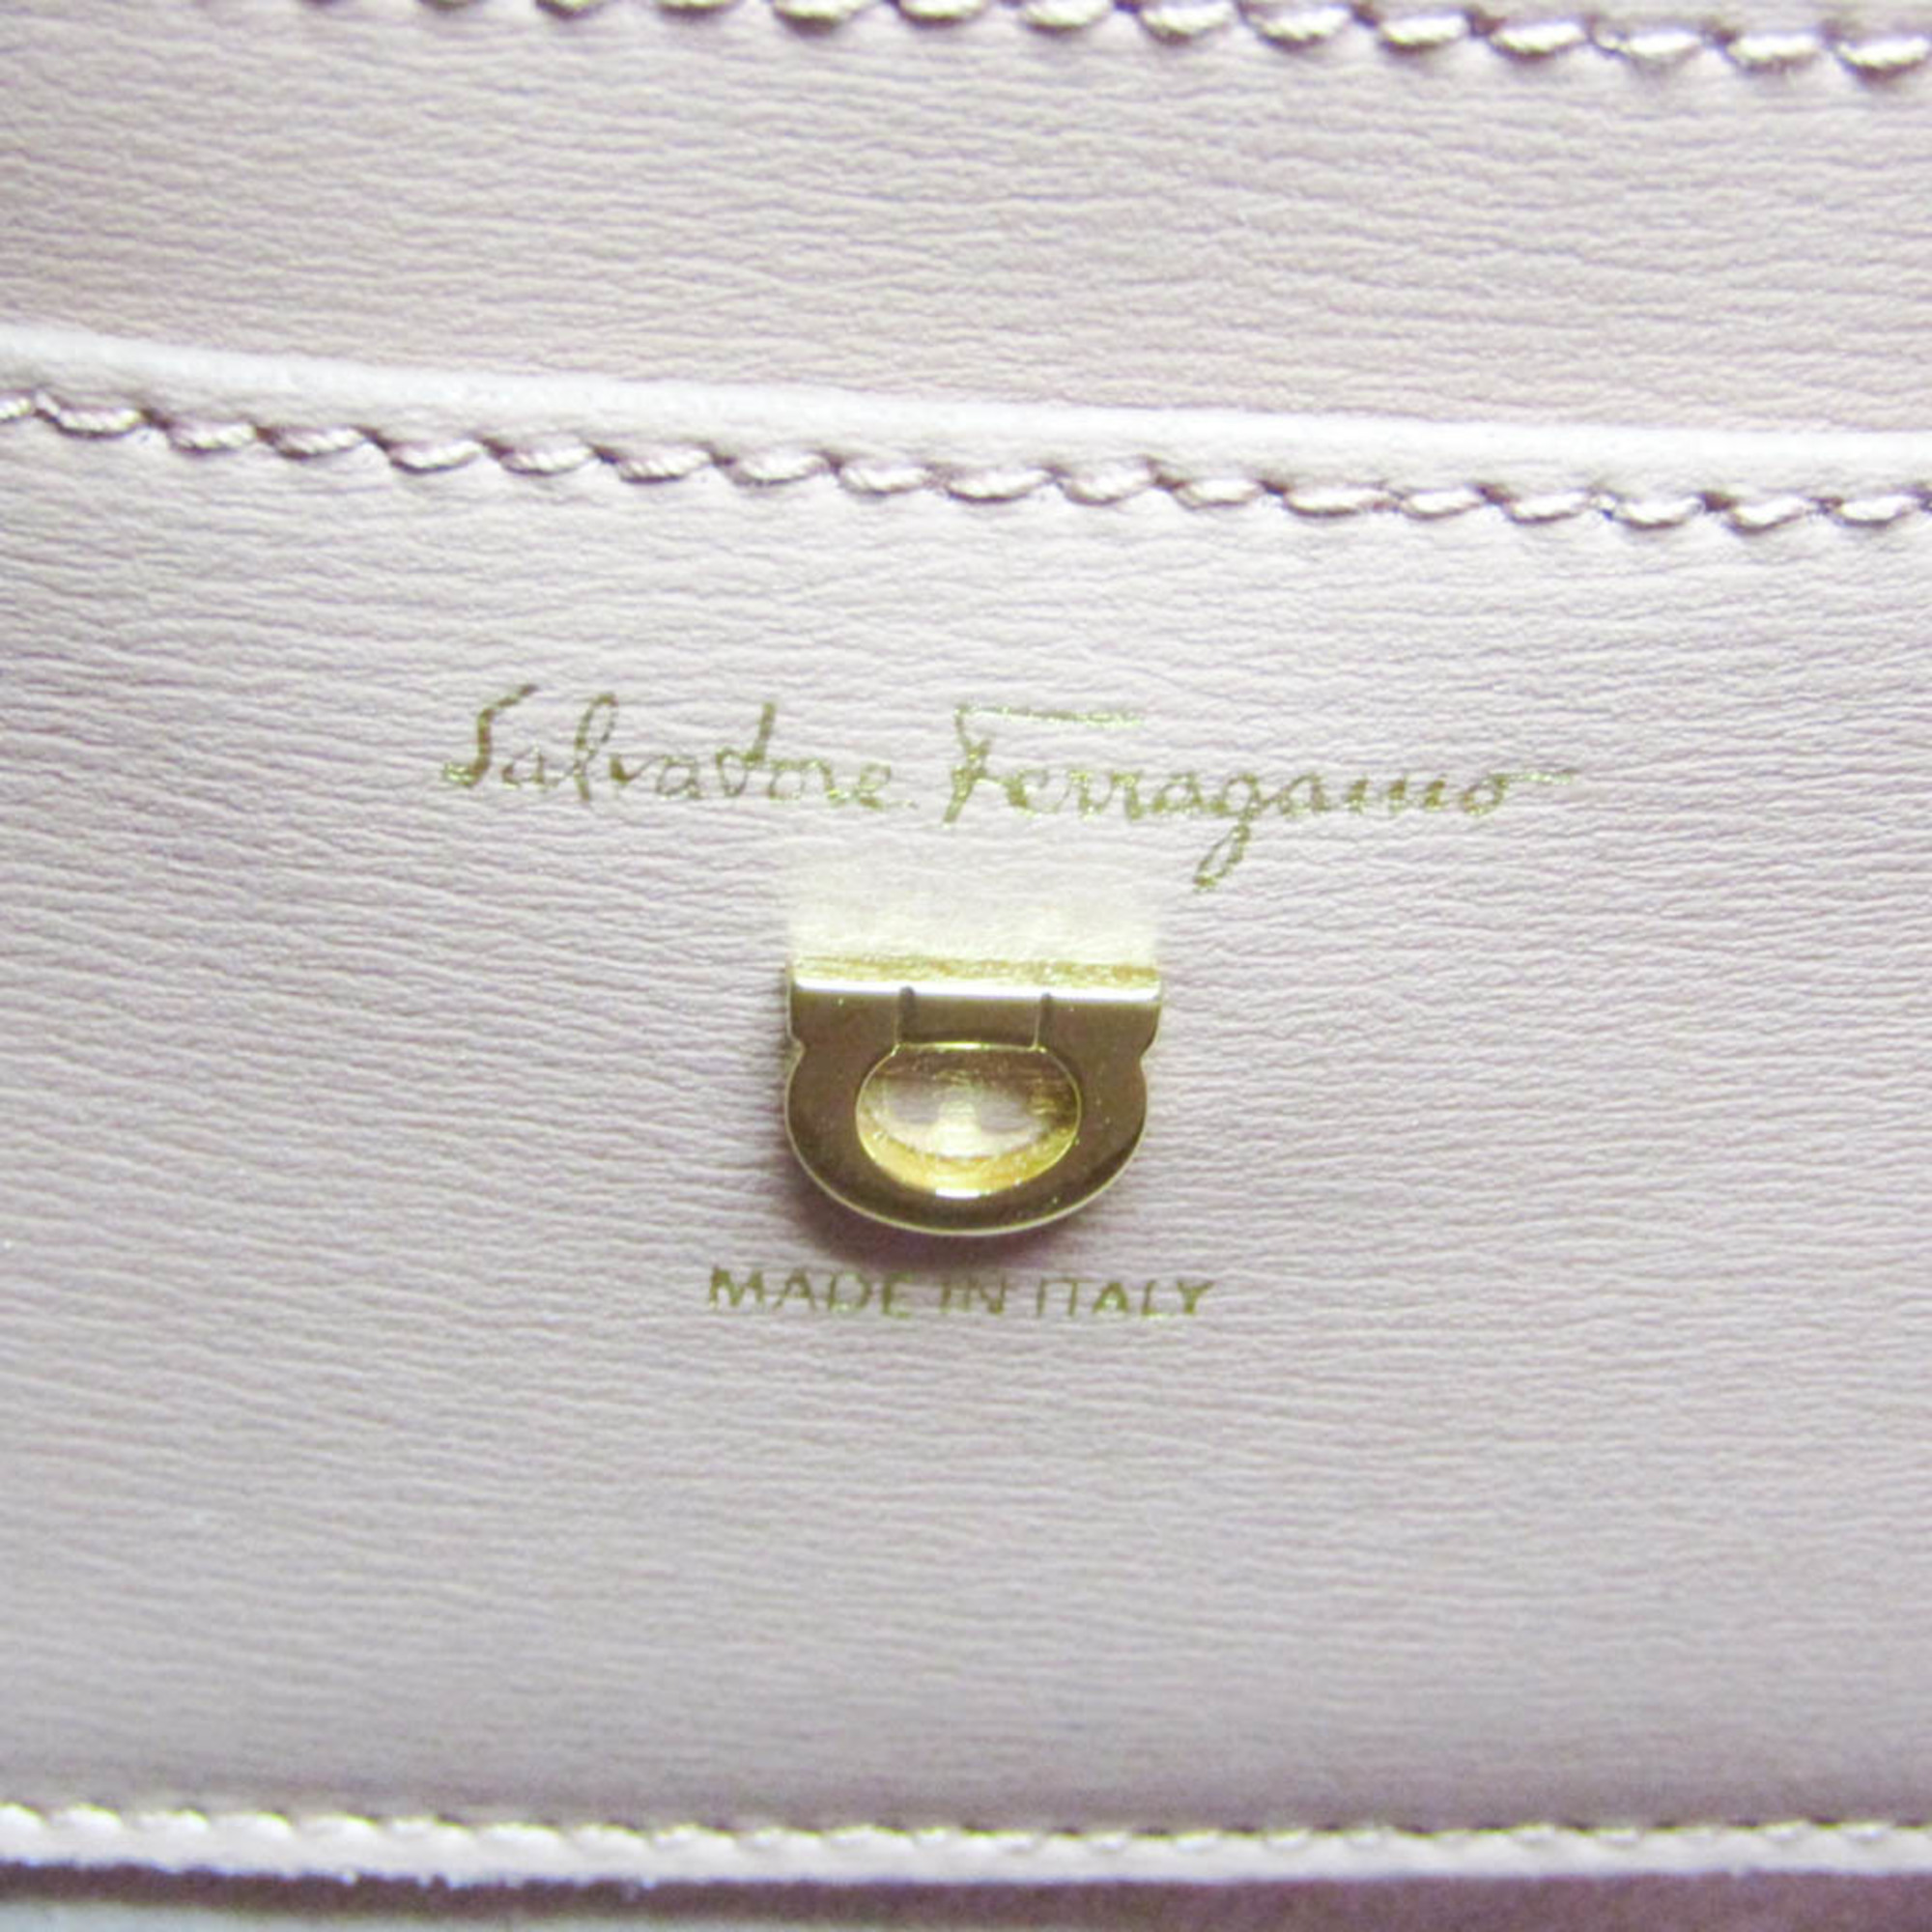 Salvatore Ferragamo Gancini DH-21 H484 Women's Leather Shoulder Bag Light Pink